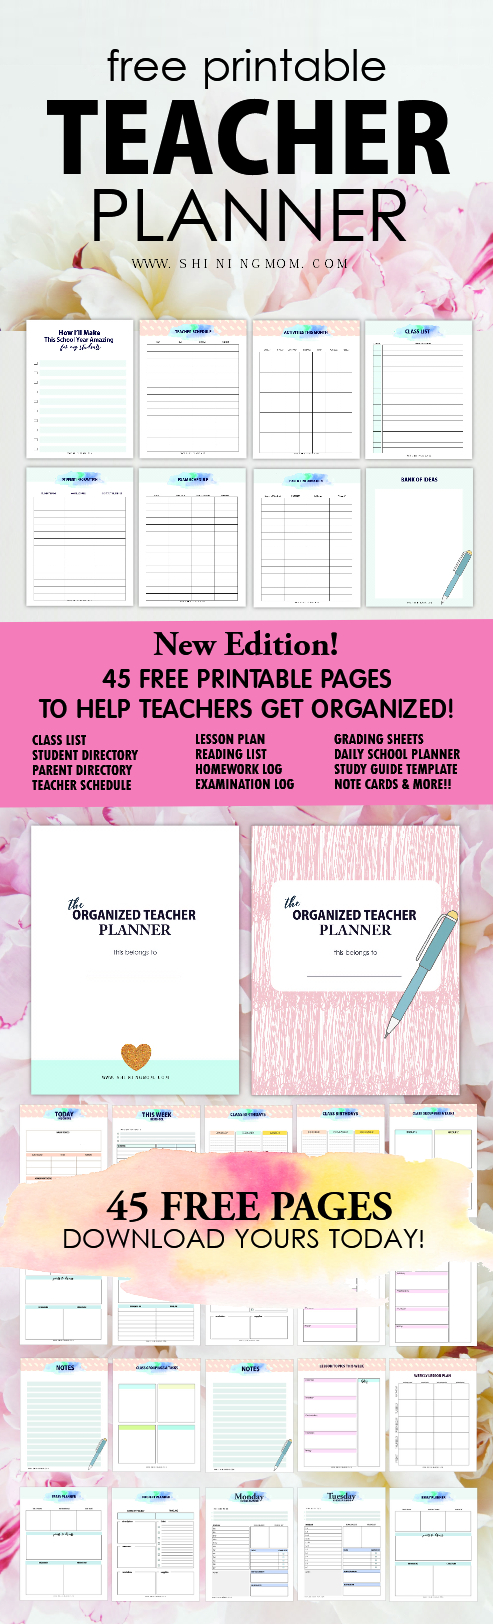 Free Printable Teacher Planner: 45+ School Organizing Templates! - Free Printable Teacher Planner Pages